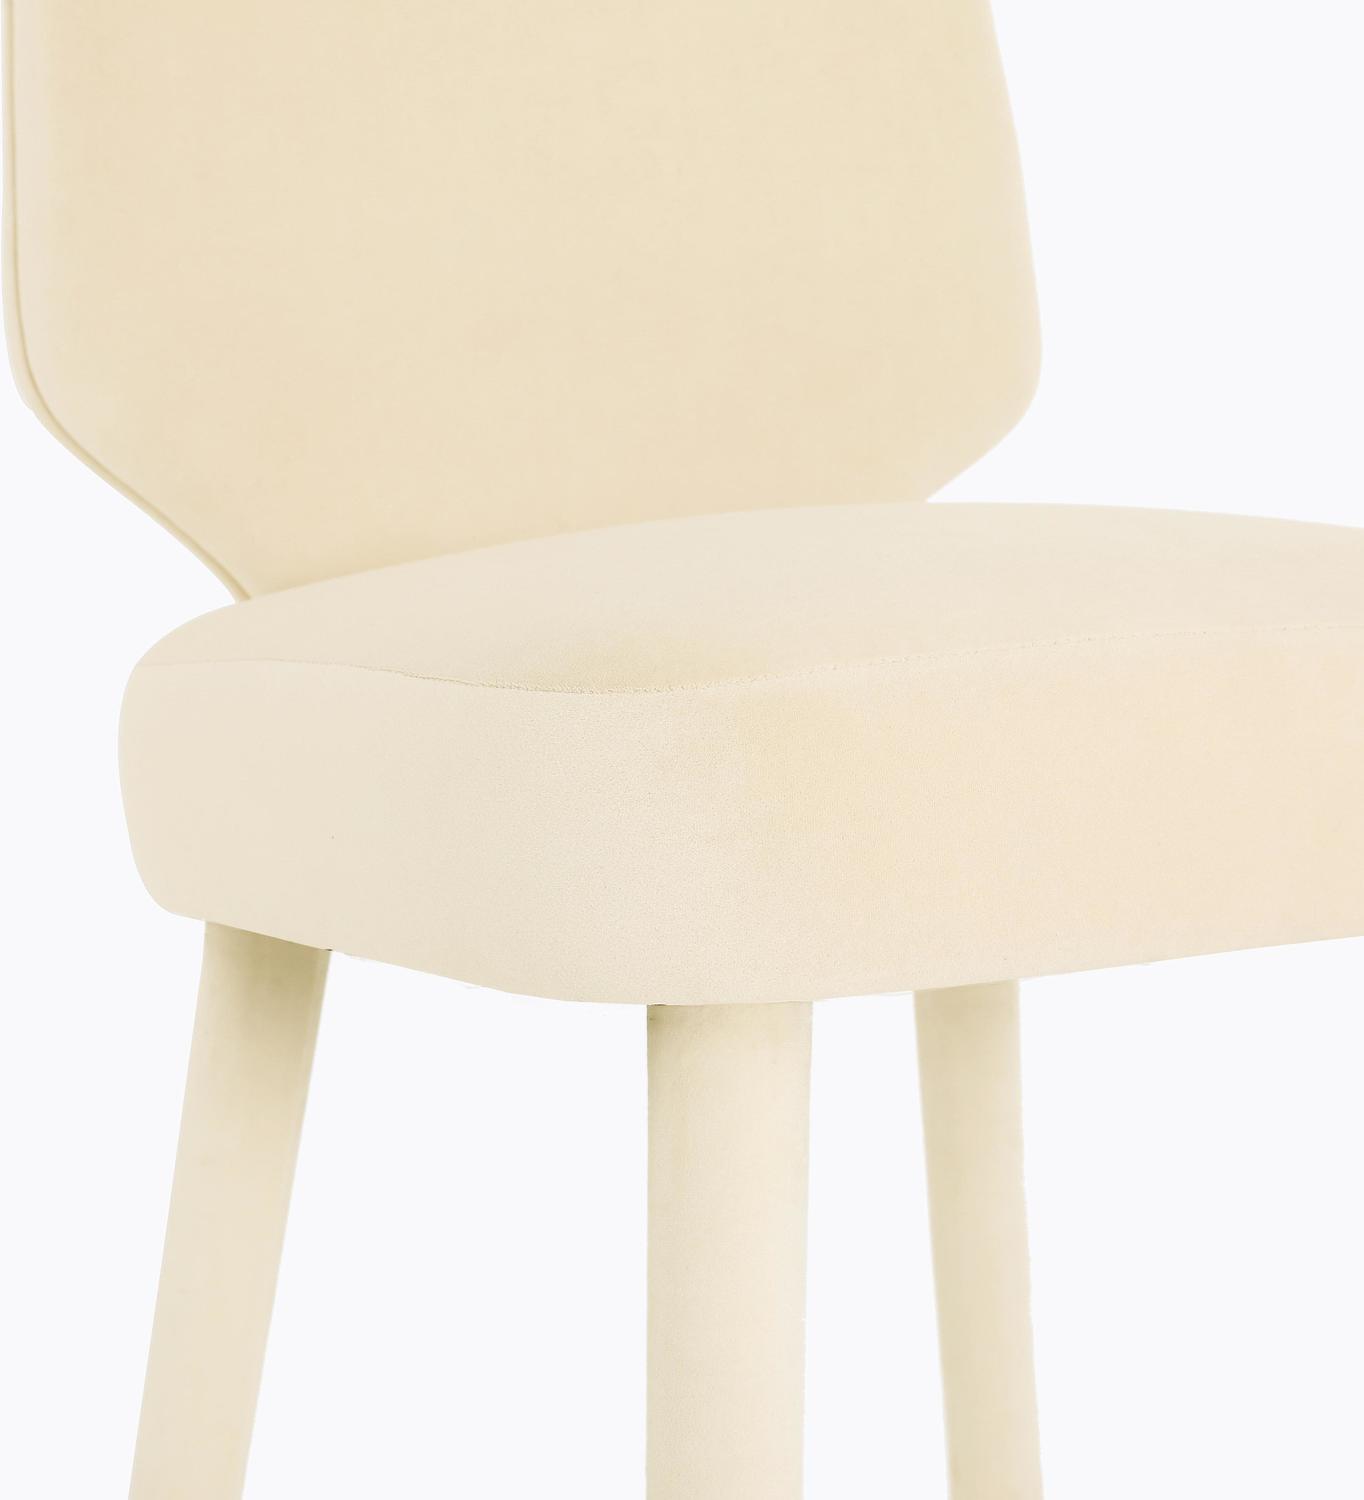 4 grey bar stools Contemporary Design Furniture Stools Cream